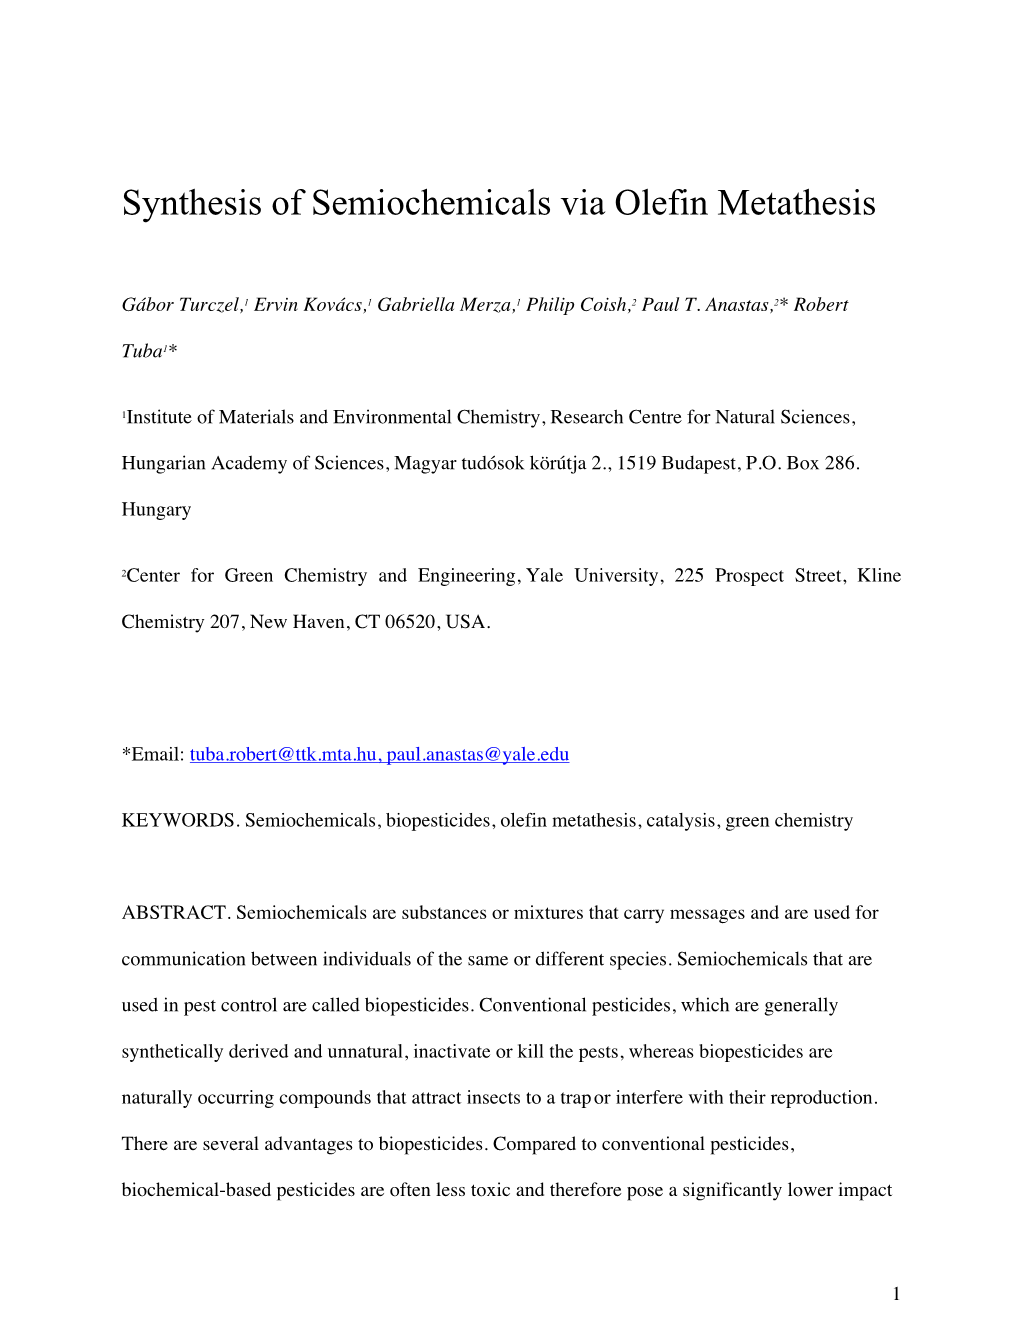 Synthesis of Semiochemicals Via Olefin Metathesis